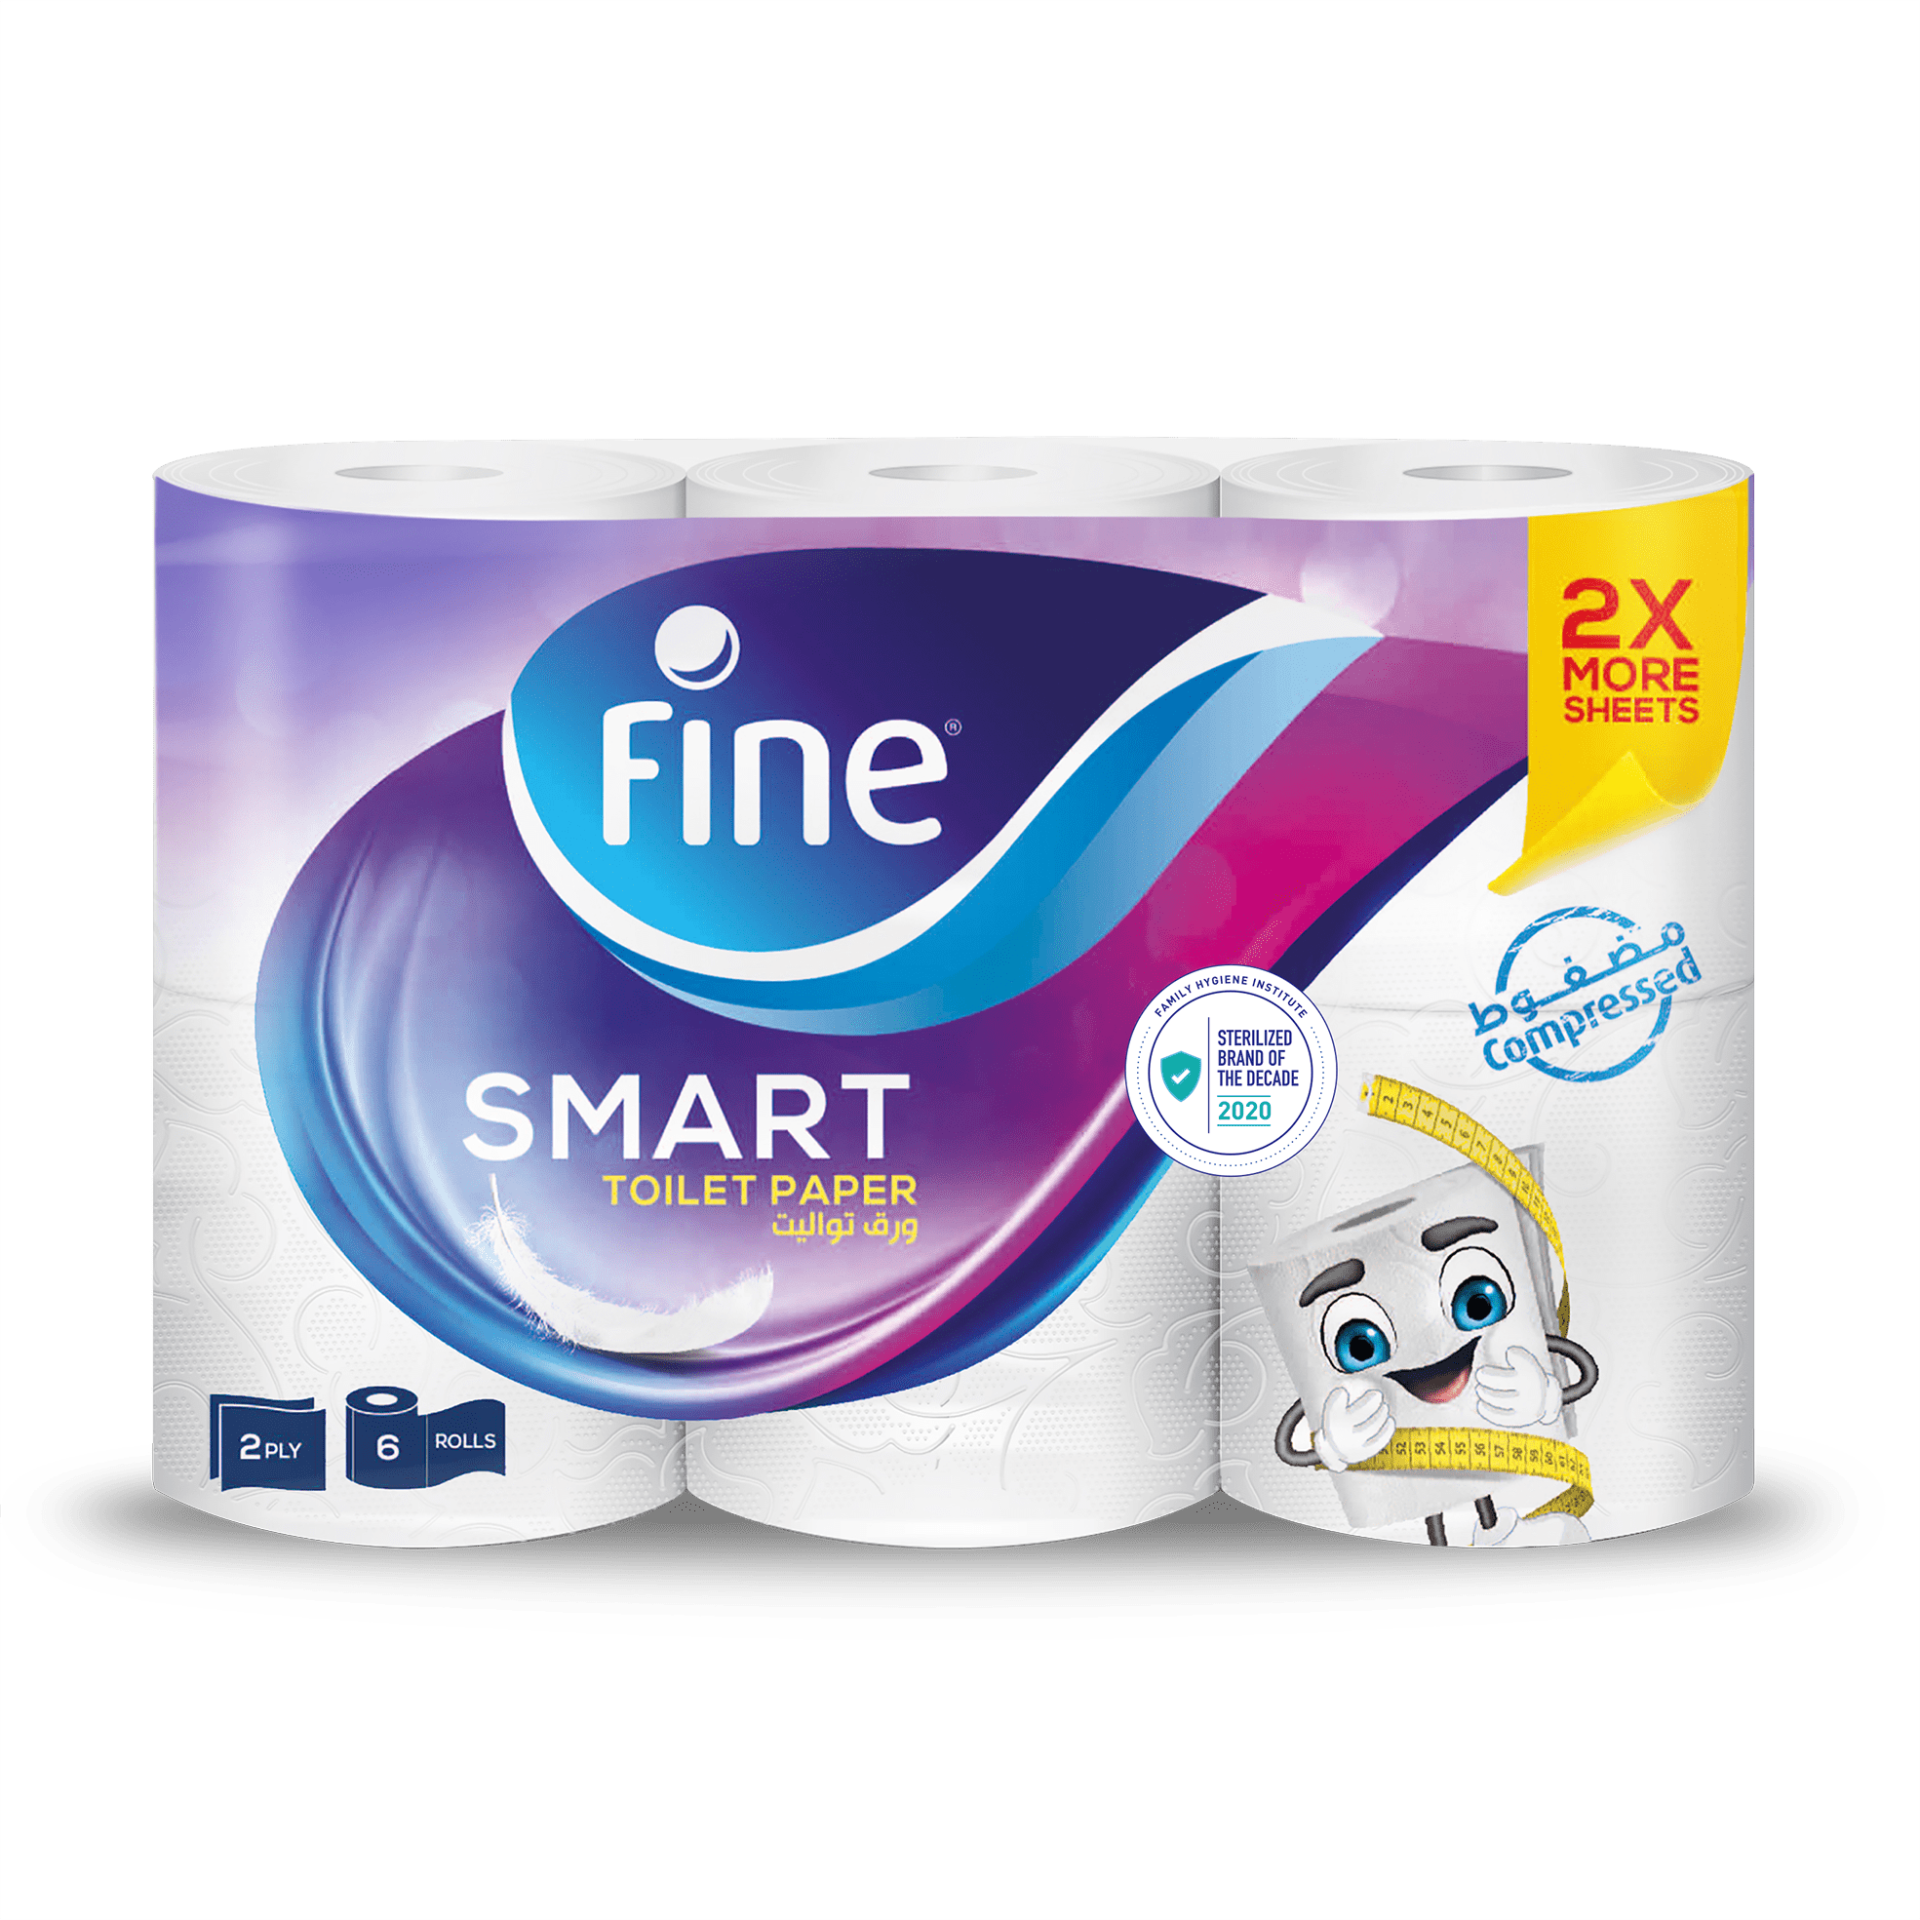 Fine Smart Toilet Paper Image